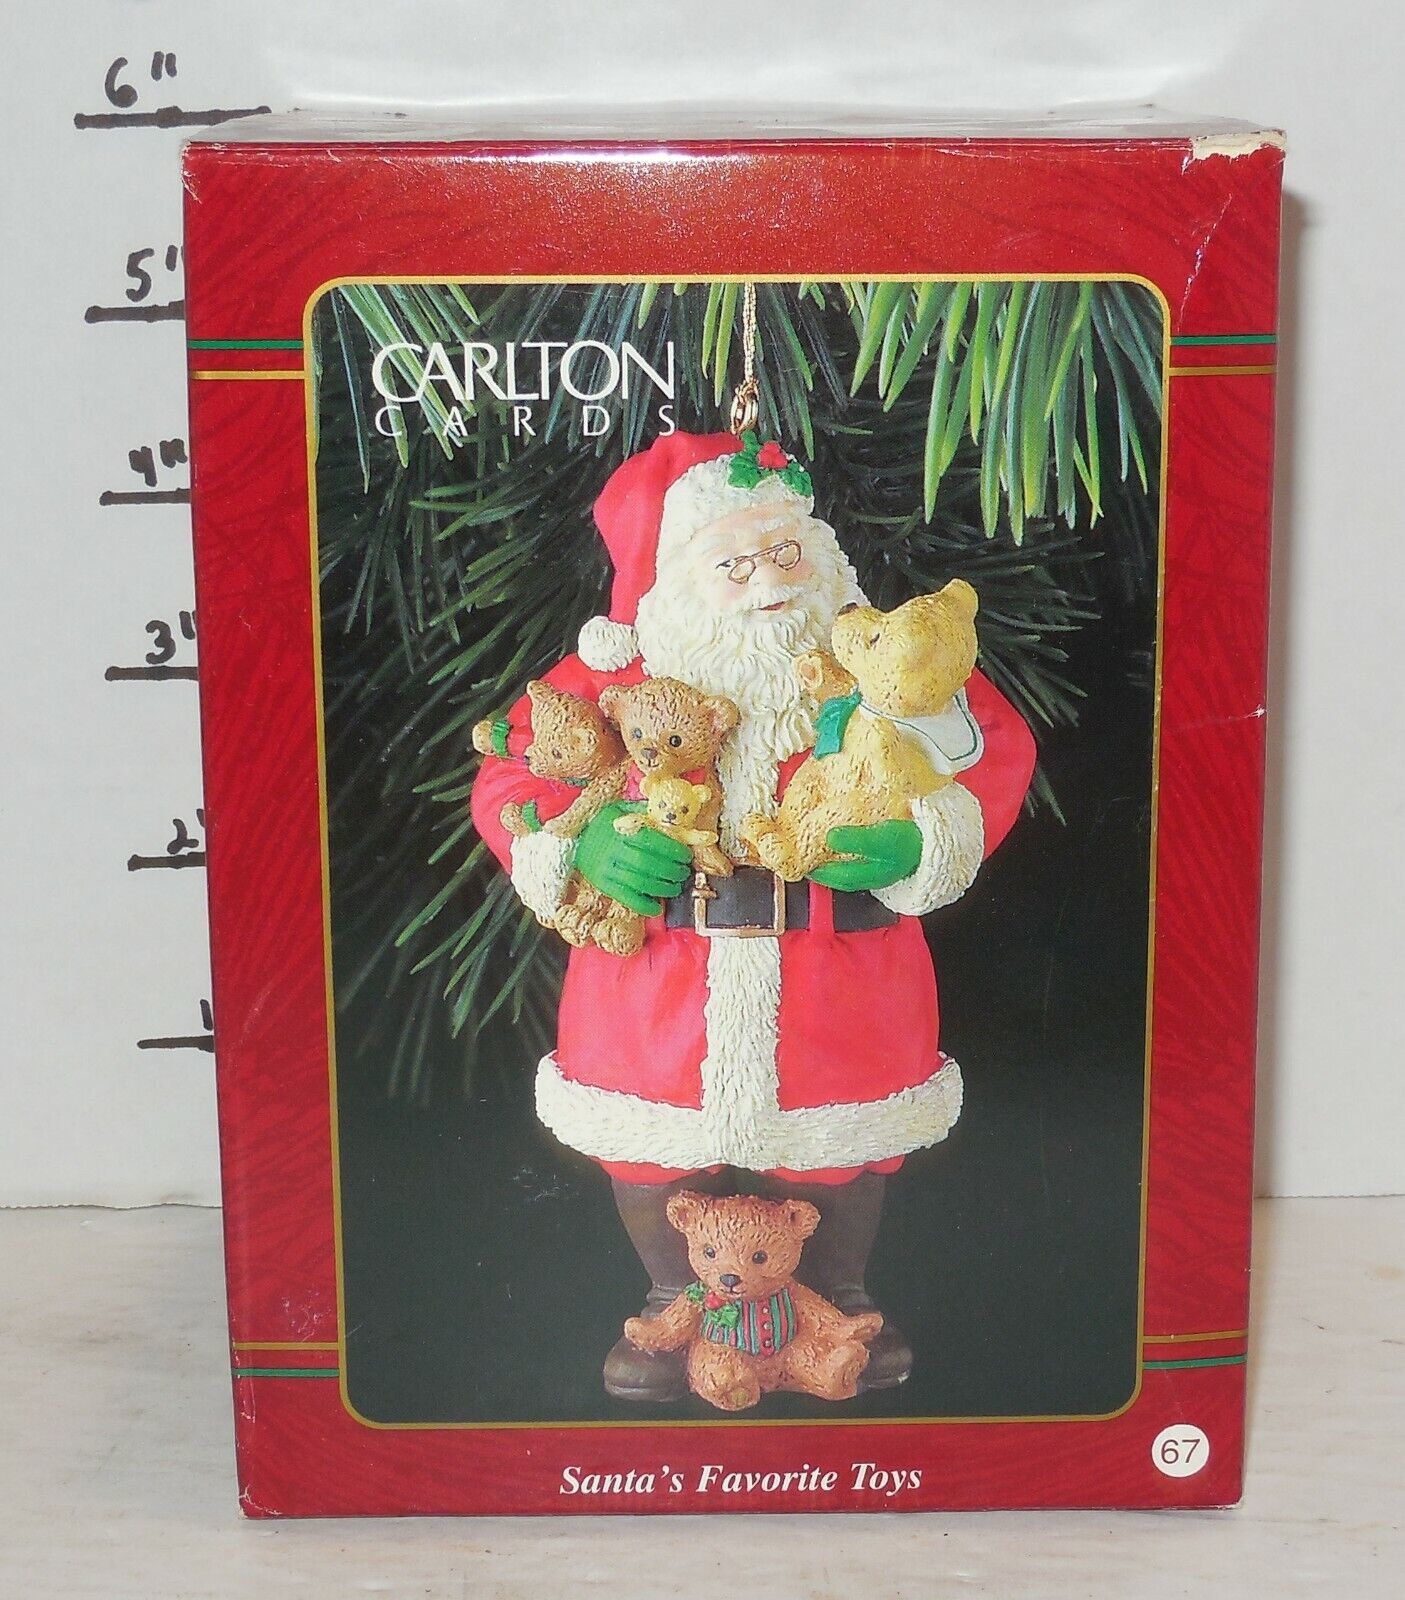 1996 Carlton Cards Heirloom Santa's Favorite Toys Ornament MIB rare HTF - $24.16